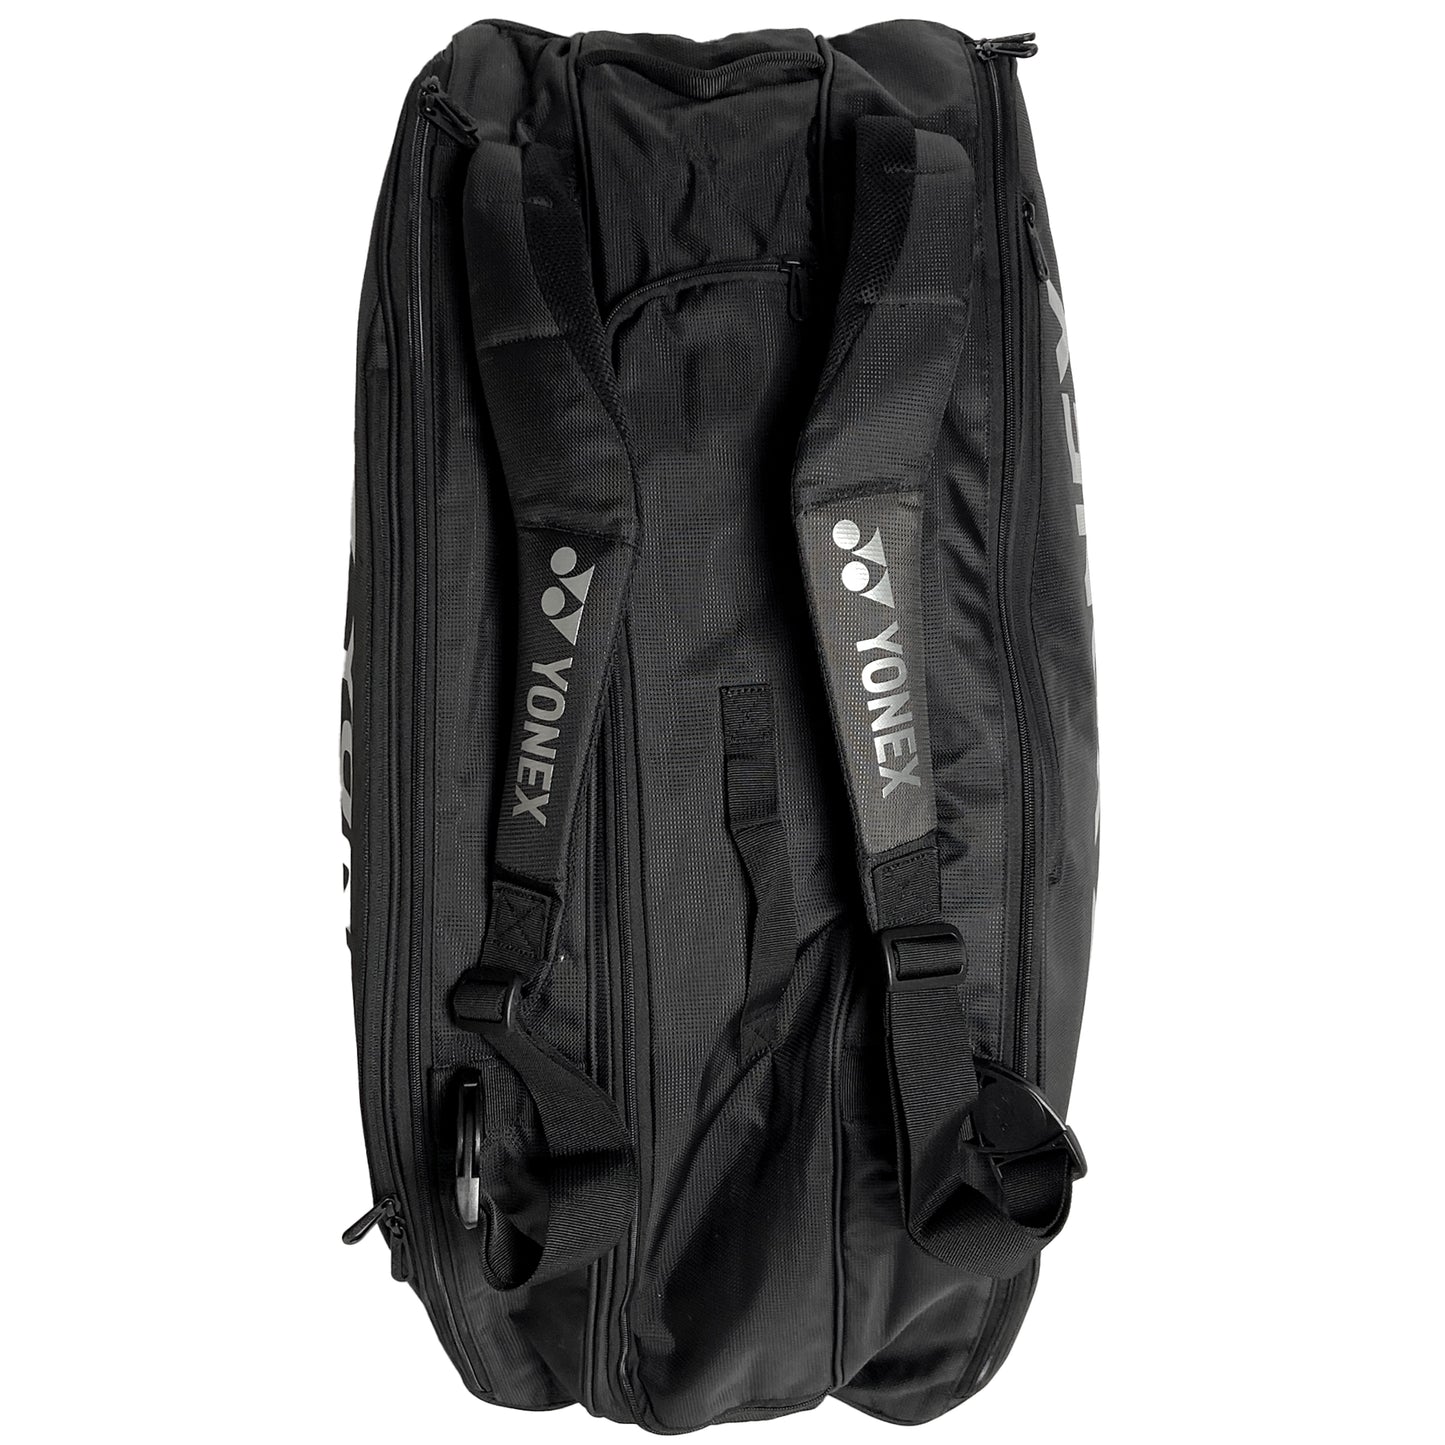 Yonex Pro Racquet Bag 9R (BAG92429) Black